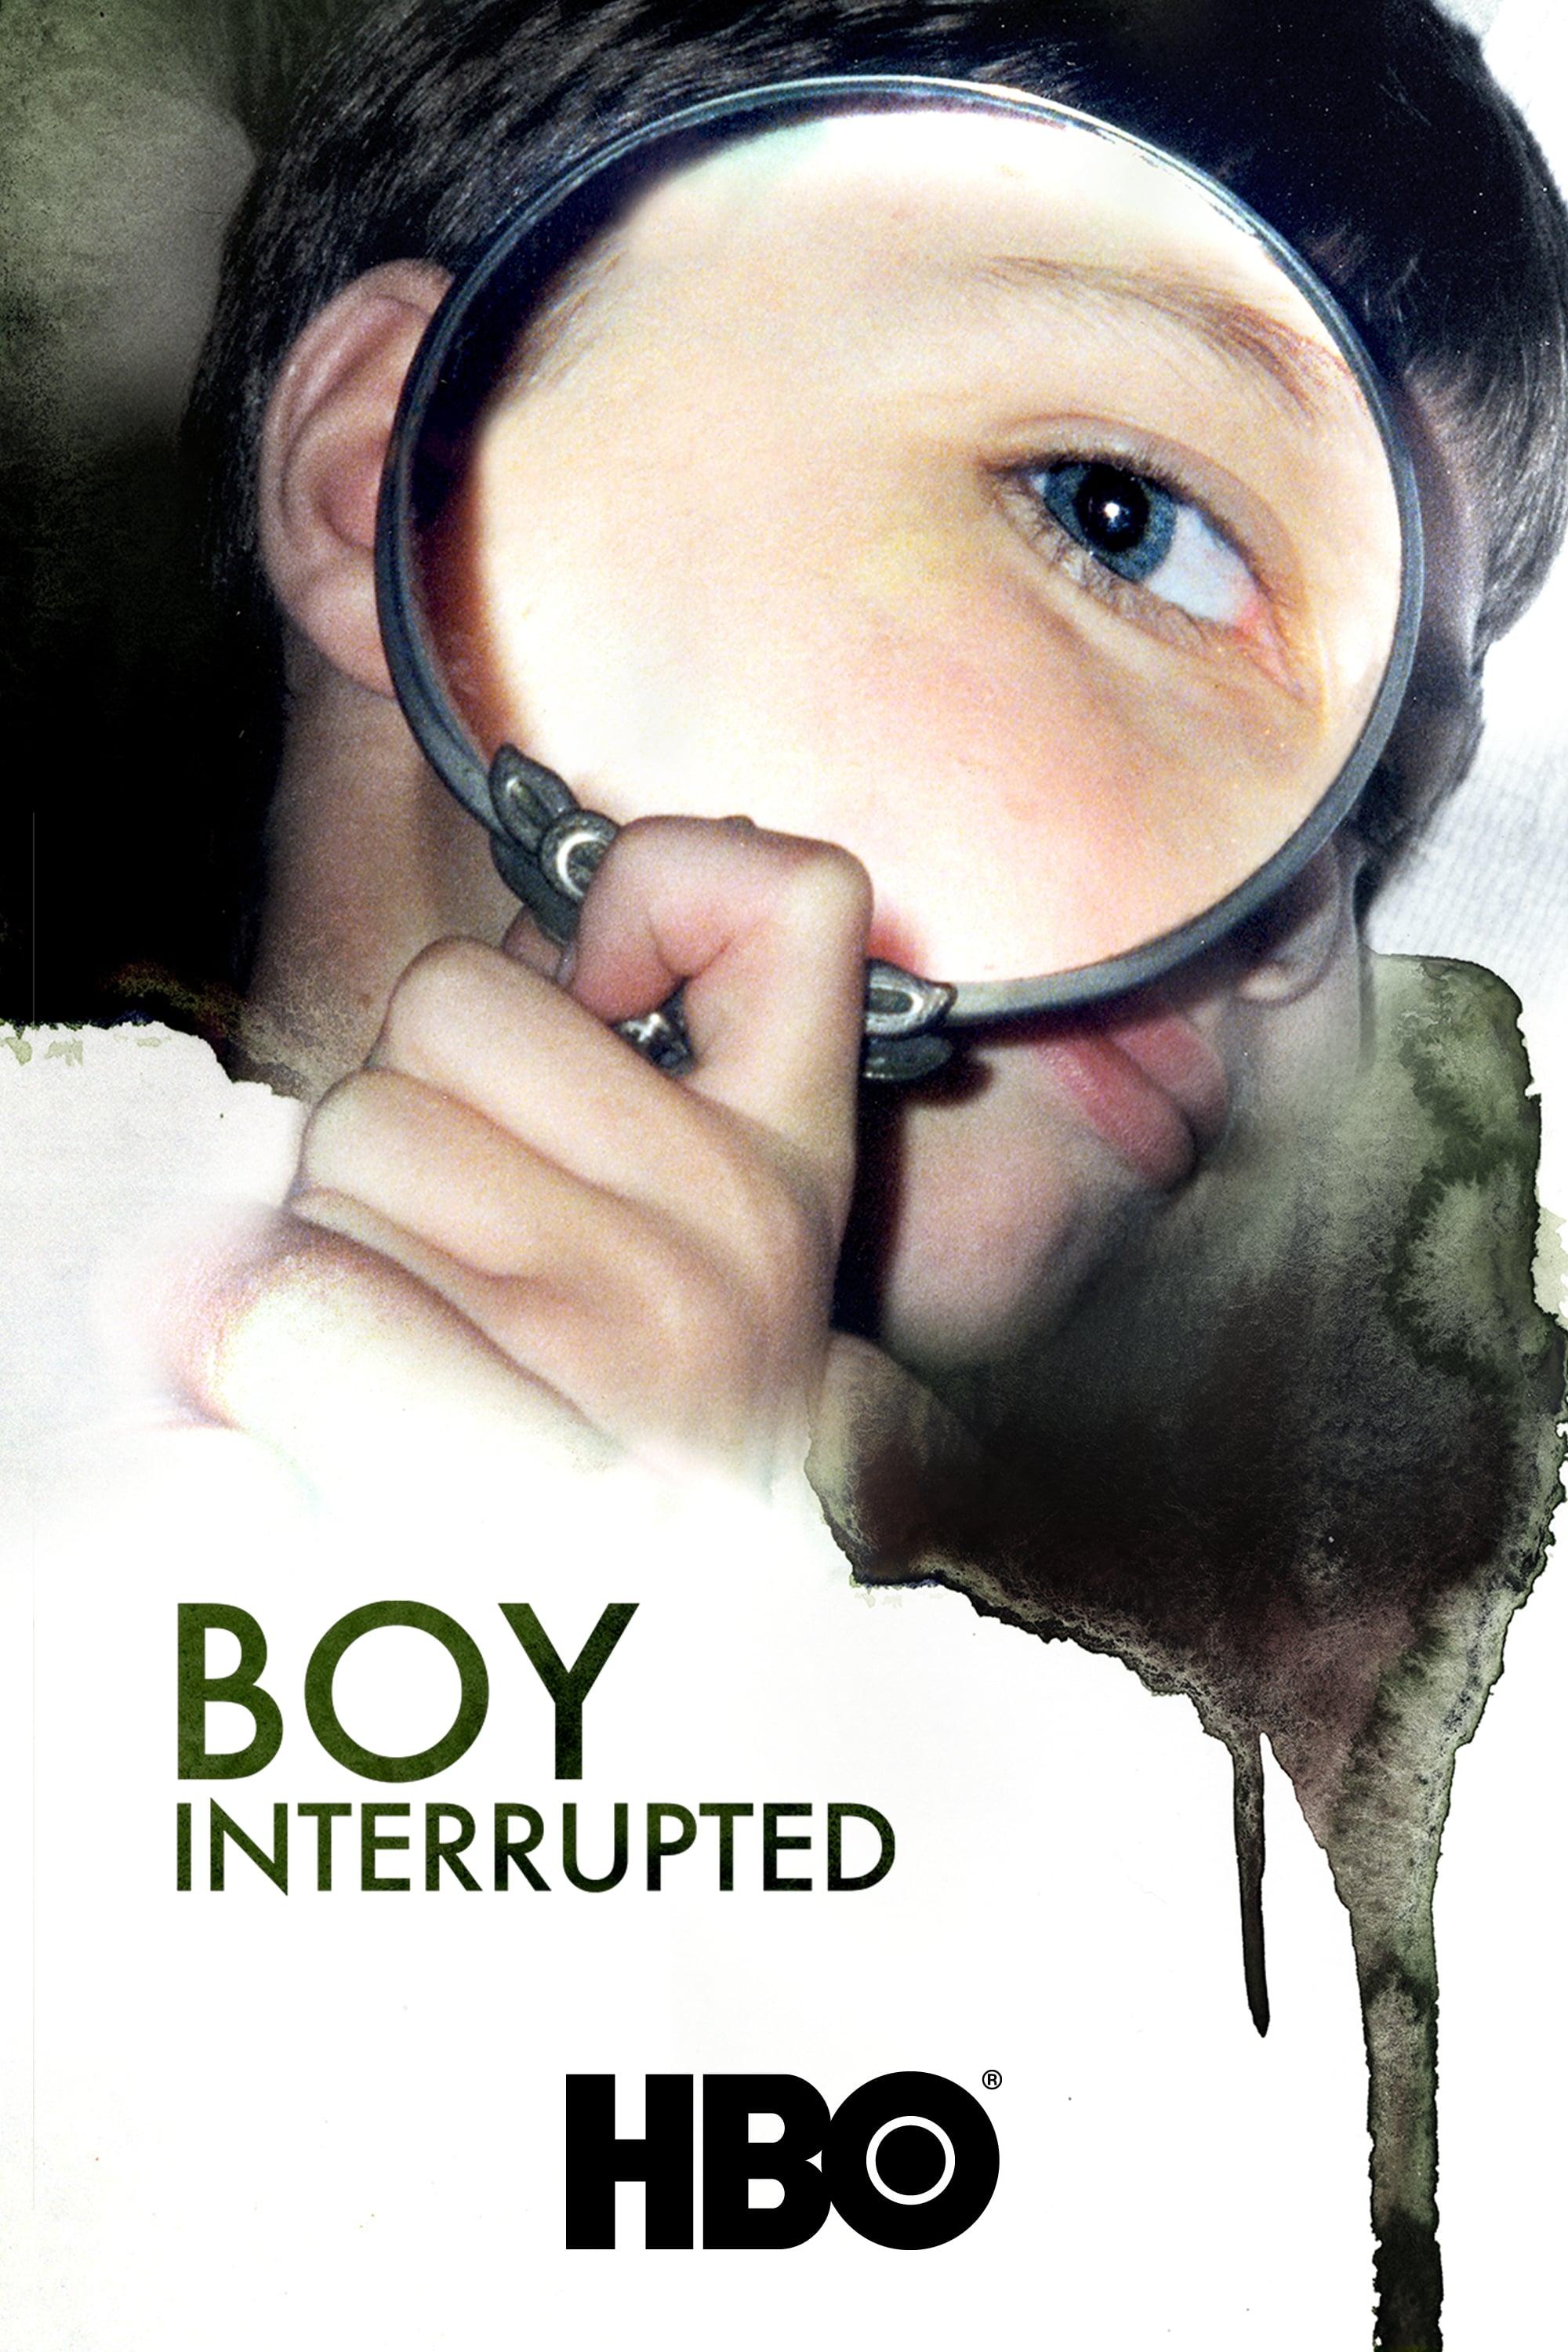 Boy Interrupted poster